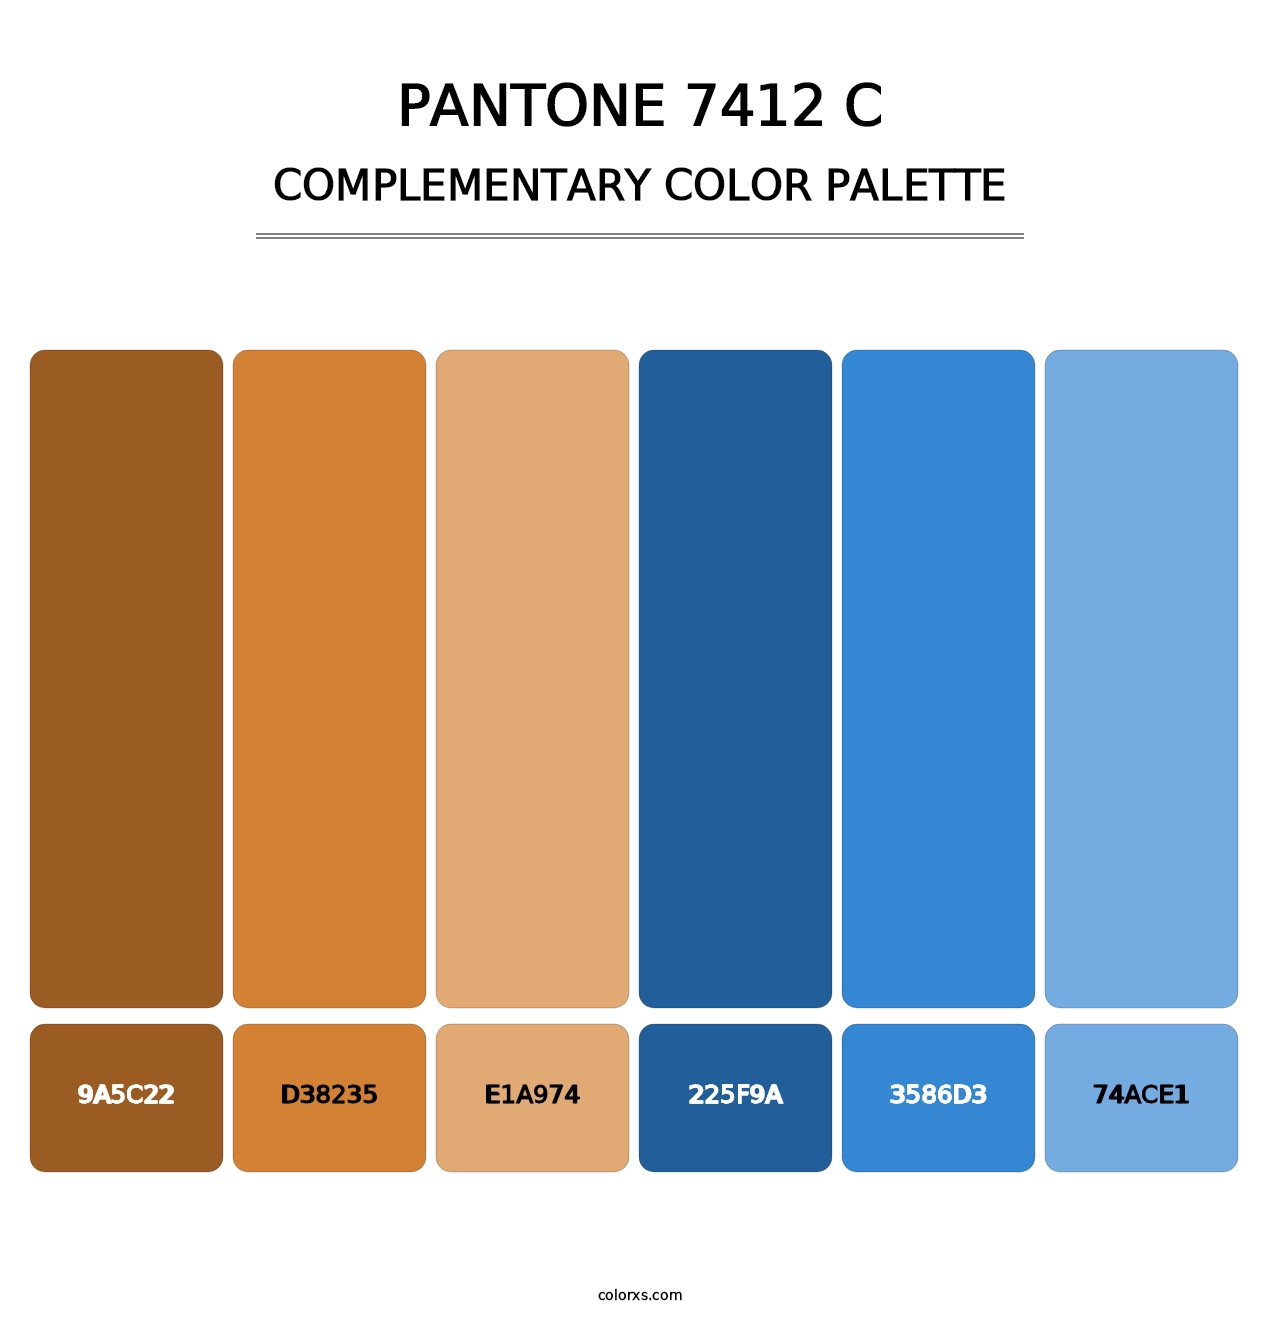 PANTONE 7412 C - Complementary Color Palette